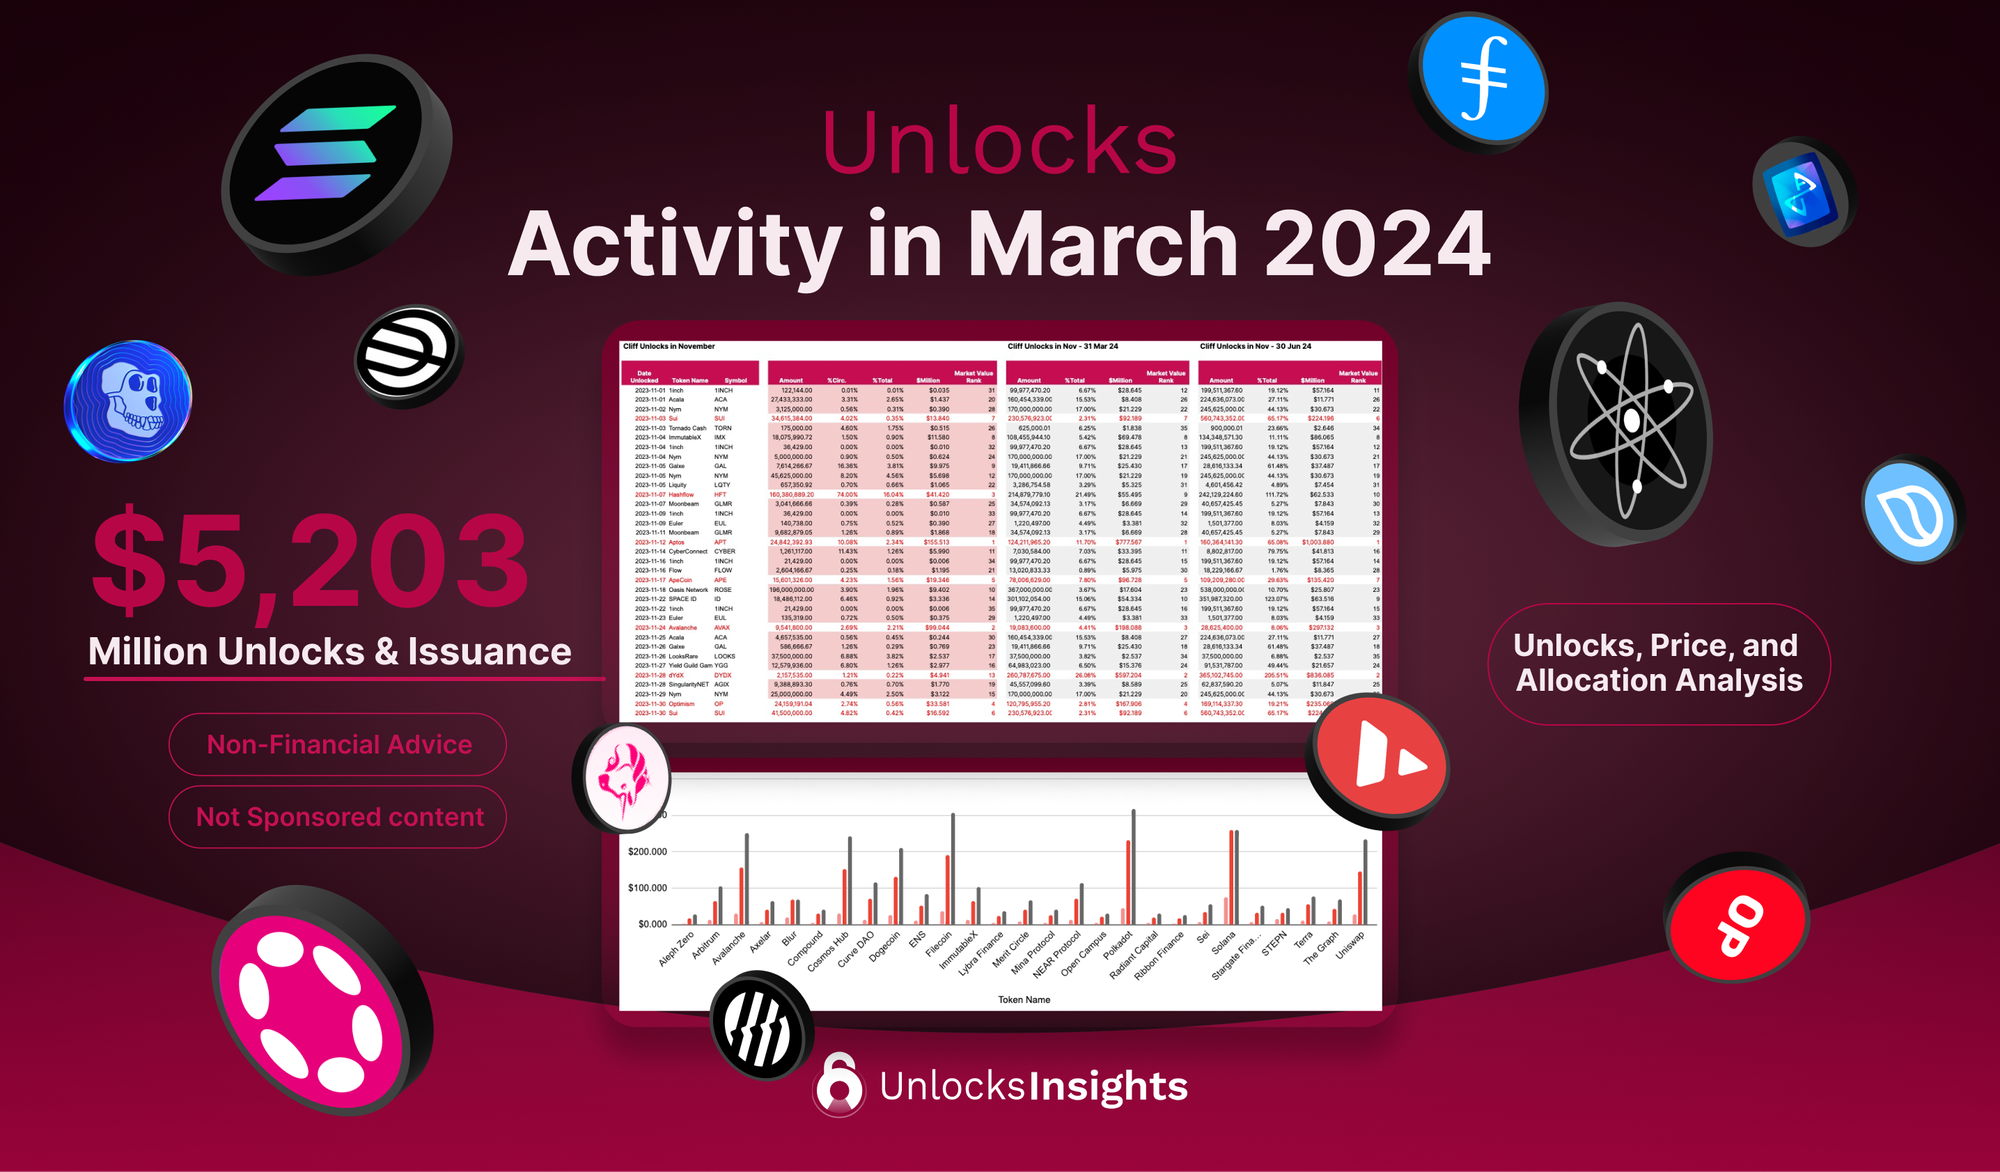 Unlocks Activity in March 2024